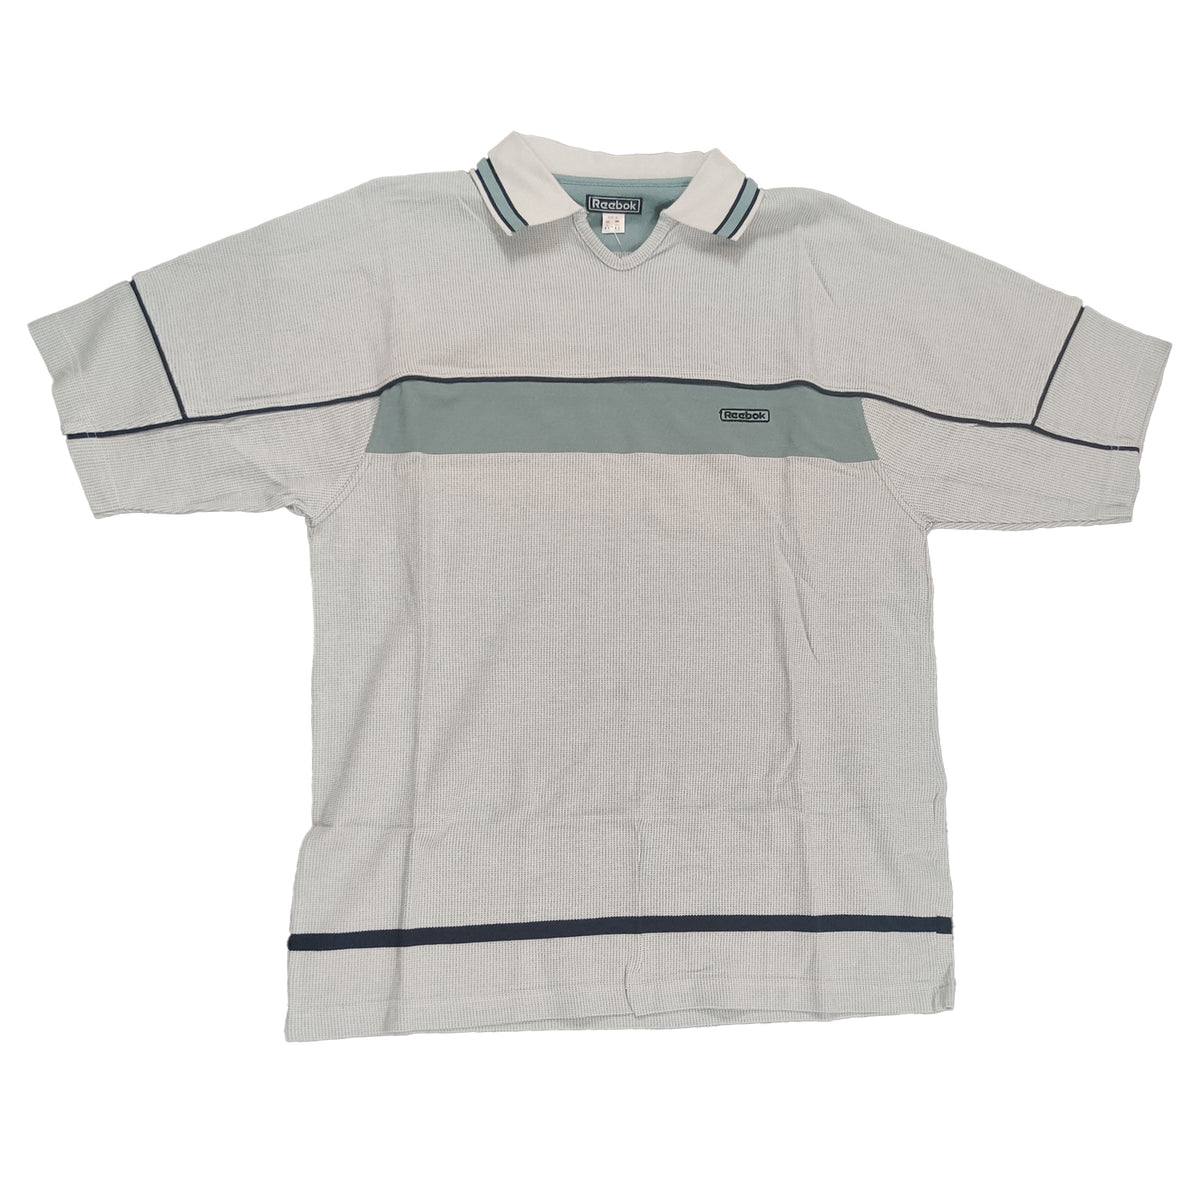 Reebok Mens Clearance Lined Polo Shirt - Medium